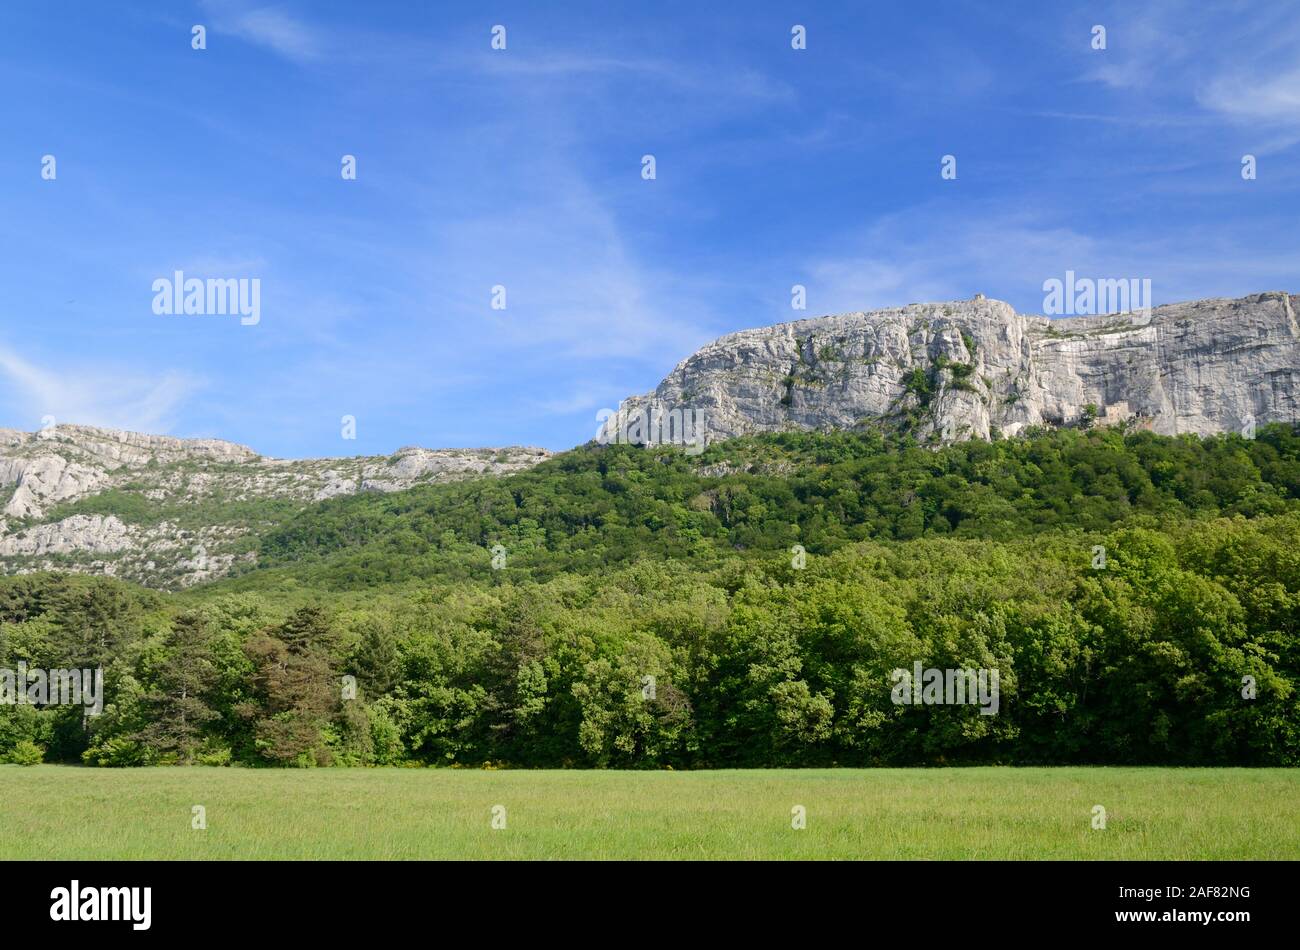 Vista panorámica del paisaje o Panorámica de la cadena de montañas de Sainte-Baume, Parc naturel régional, o Reserva Natural Bosque Beechwood Provence Francia Foto de stock